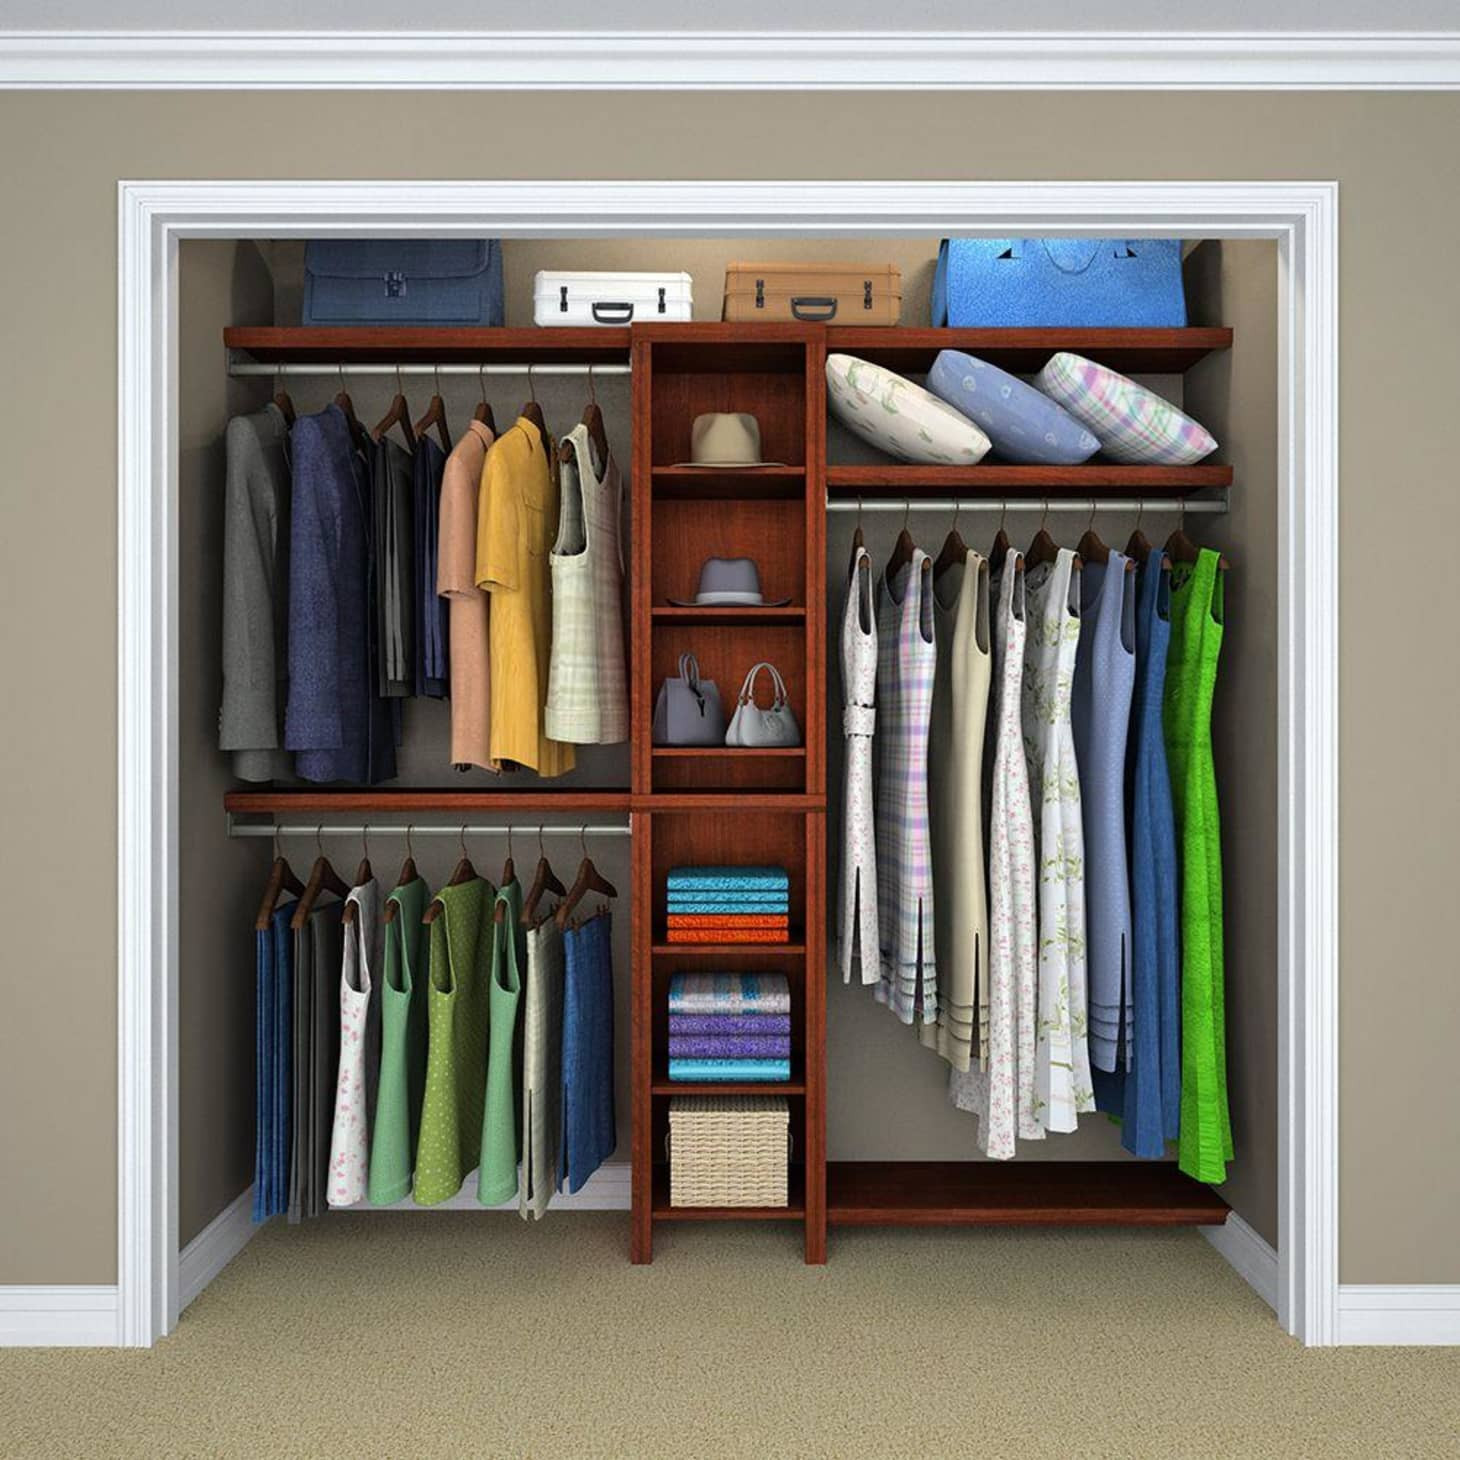 DIY Closet Organizer Systems
 DIY Closet Systems You Can Easily Install Yourself